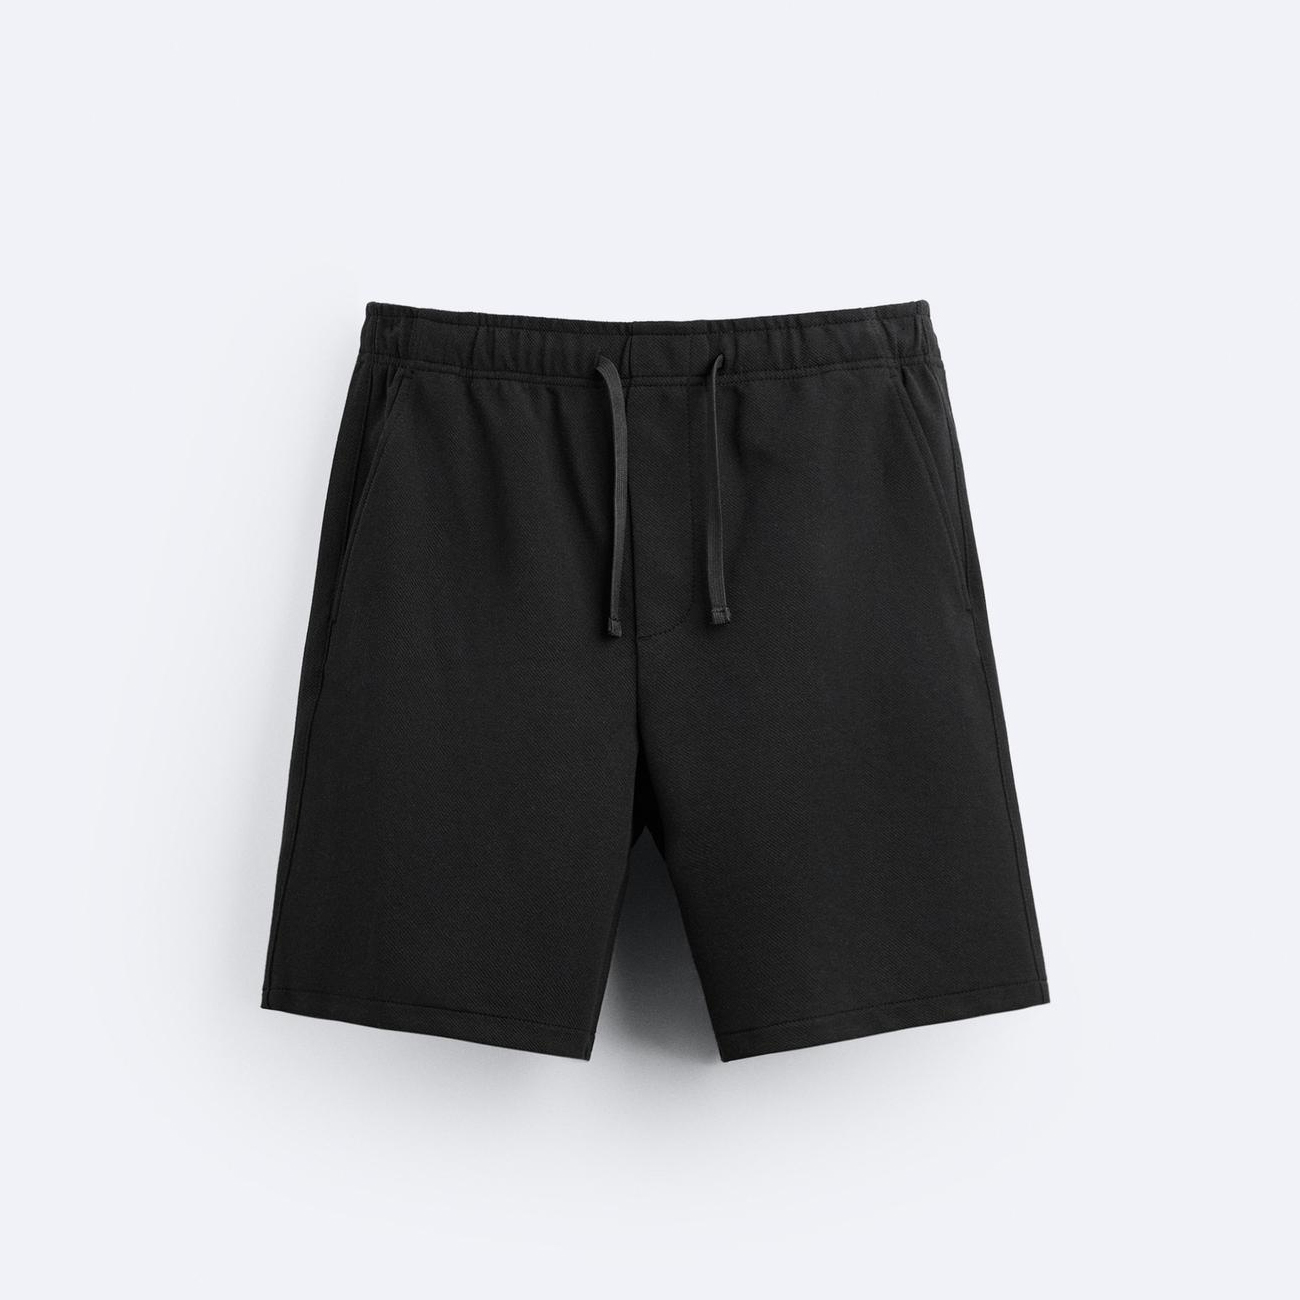 Шорты Zara Soft Textured Bermuda, черный шорты джоггеры zara bermuda черный